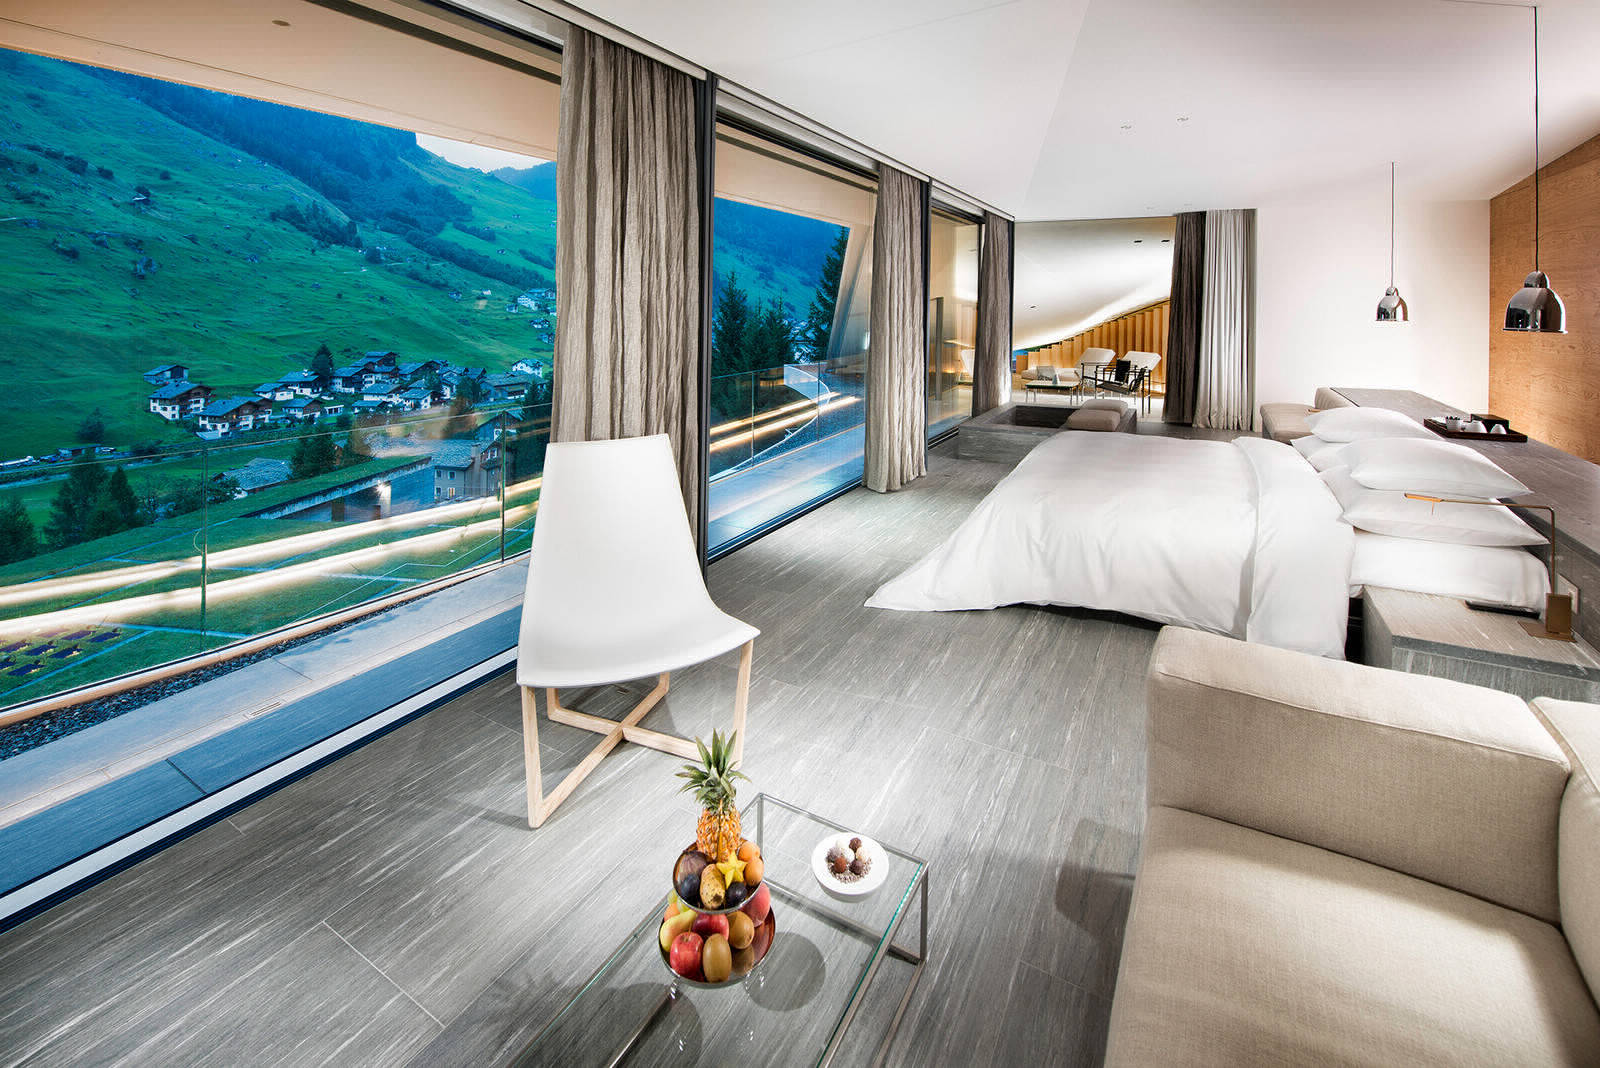 7132 Hotel в Швейцарских Альпах